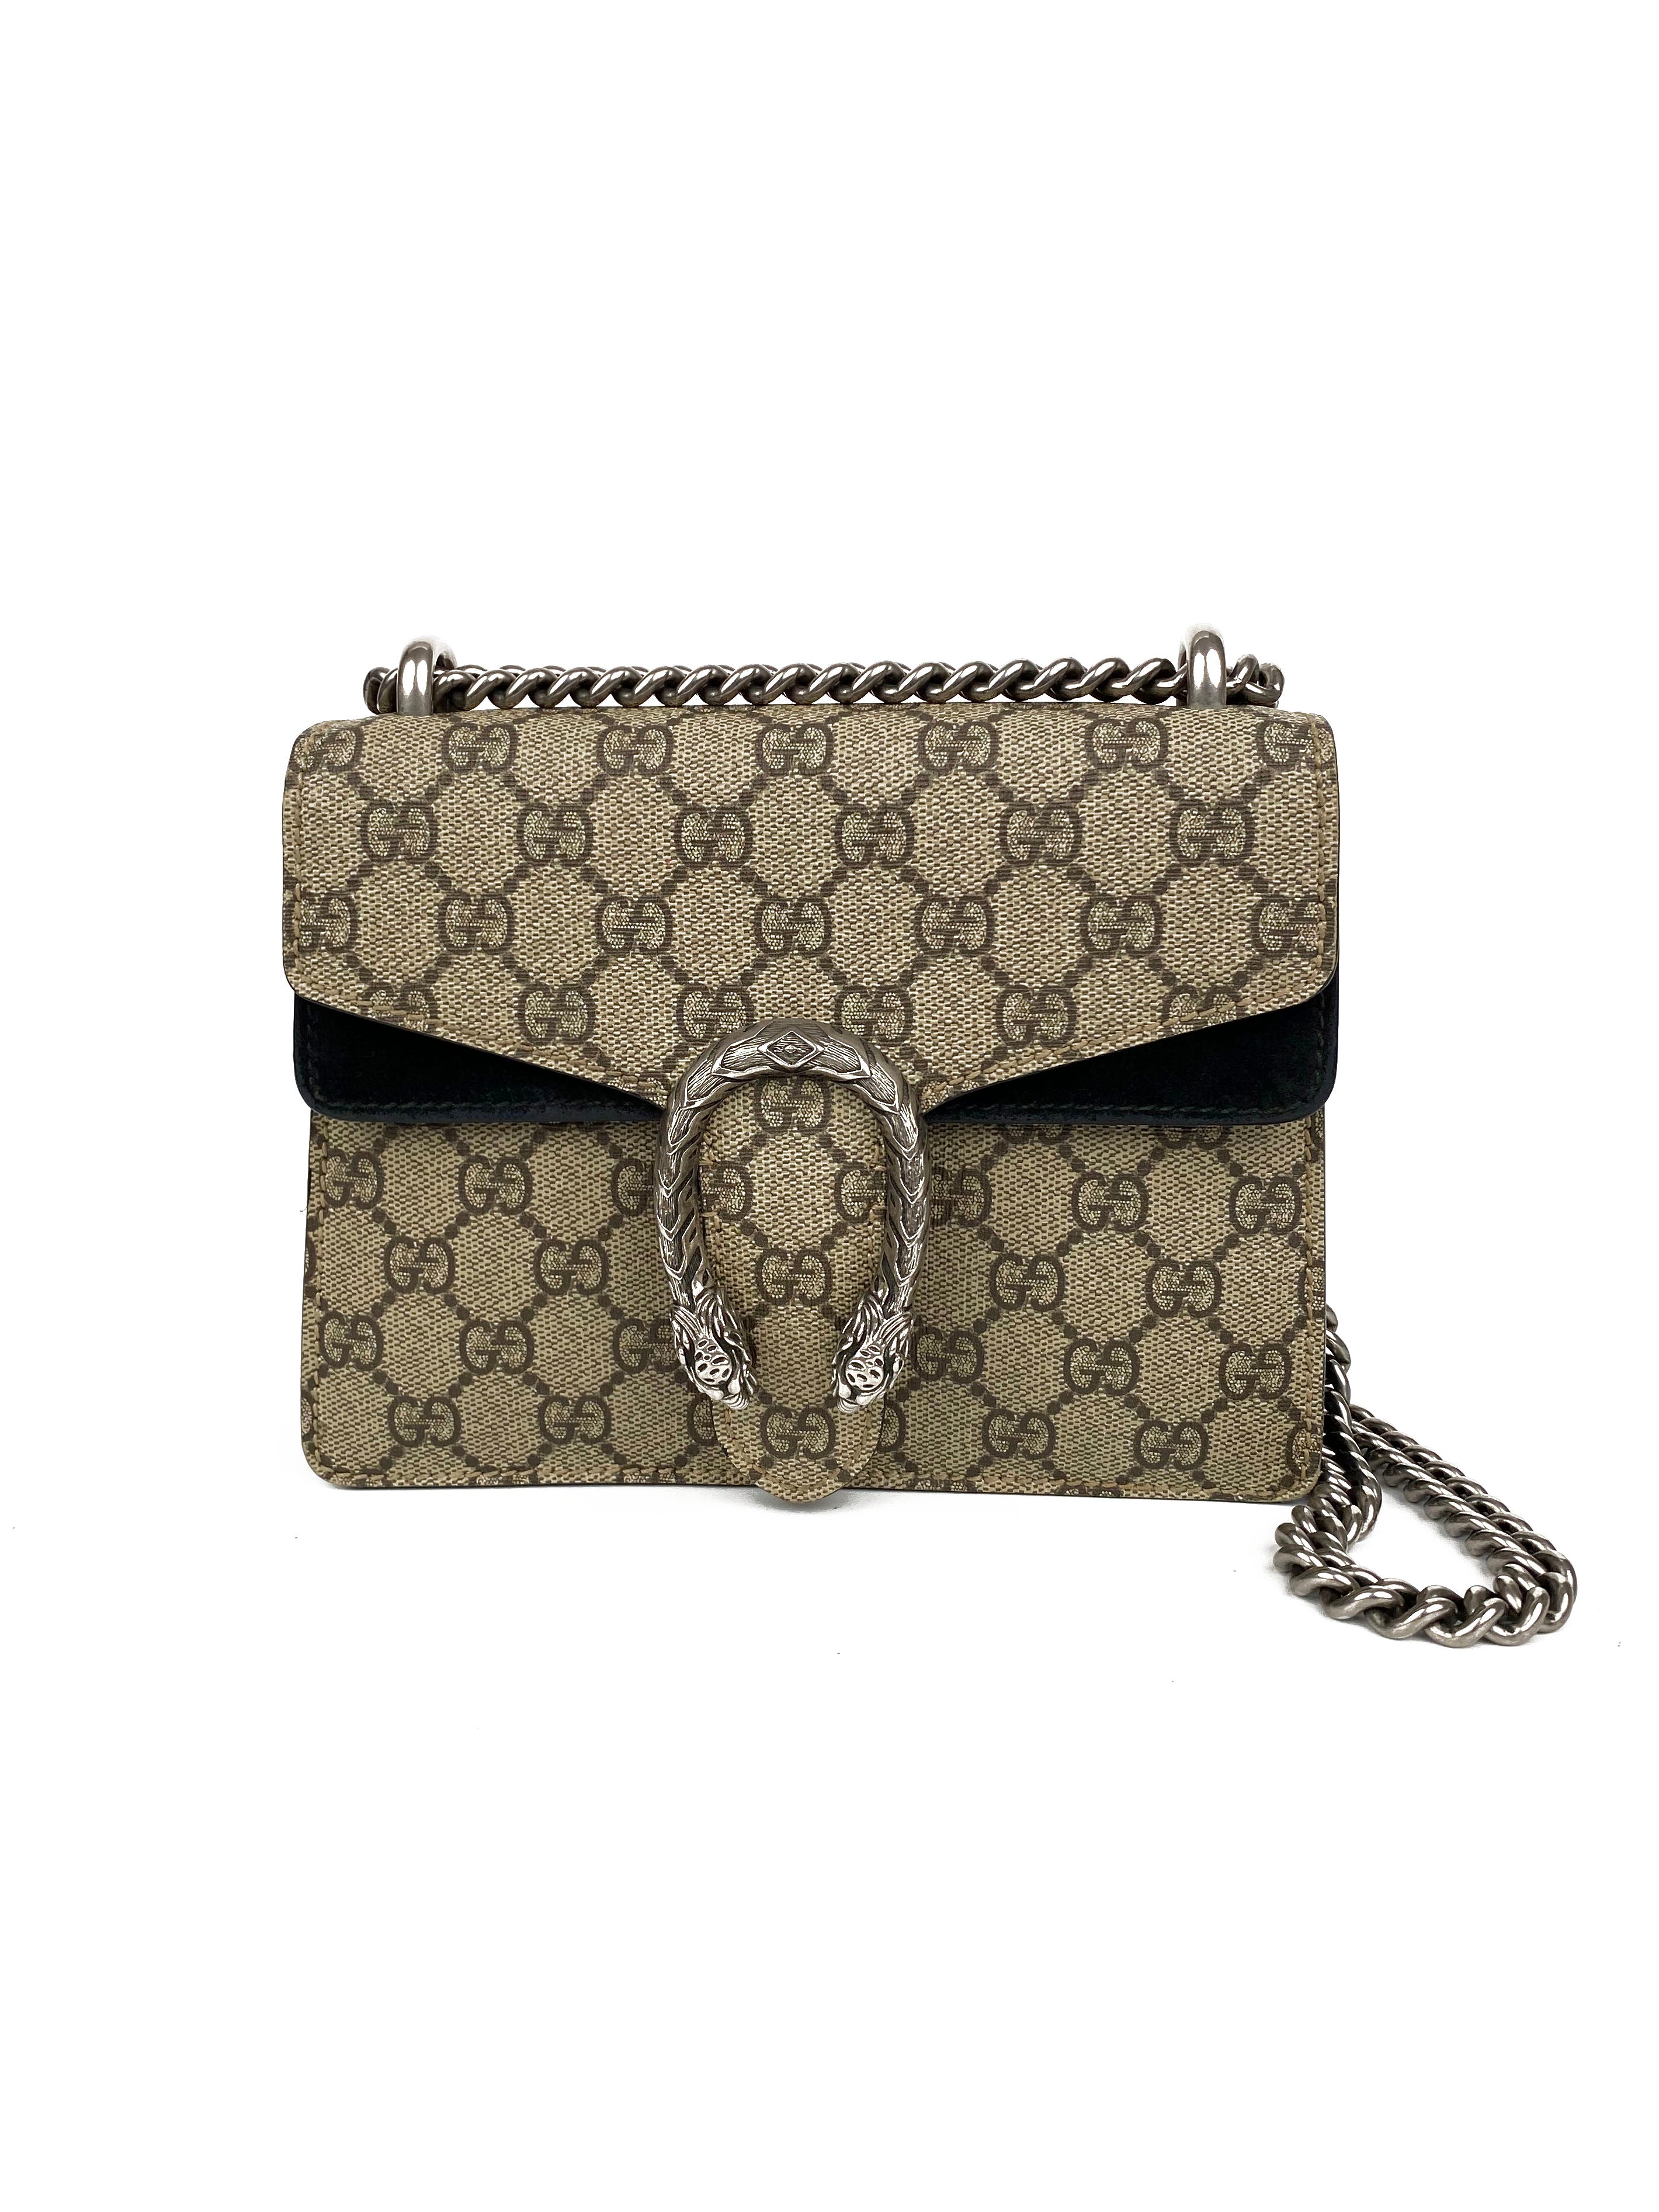 Gucci GG Supreme Mini Dionysus Bag with Black Trim